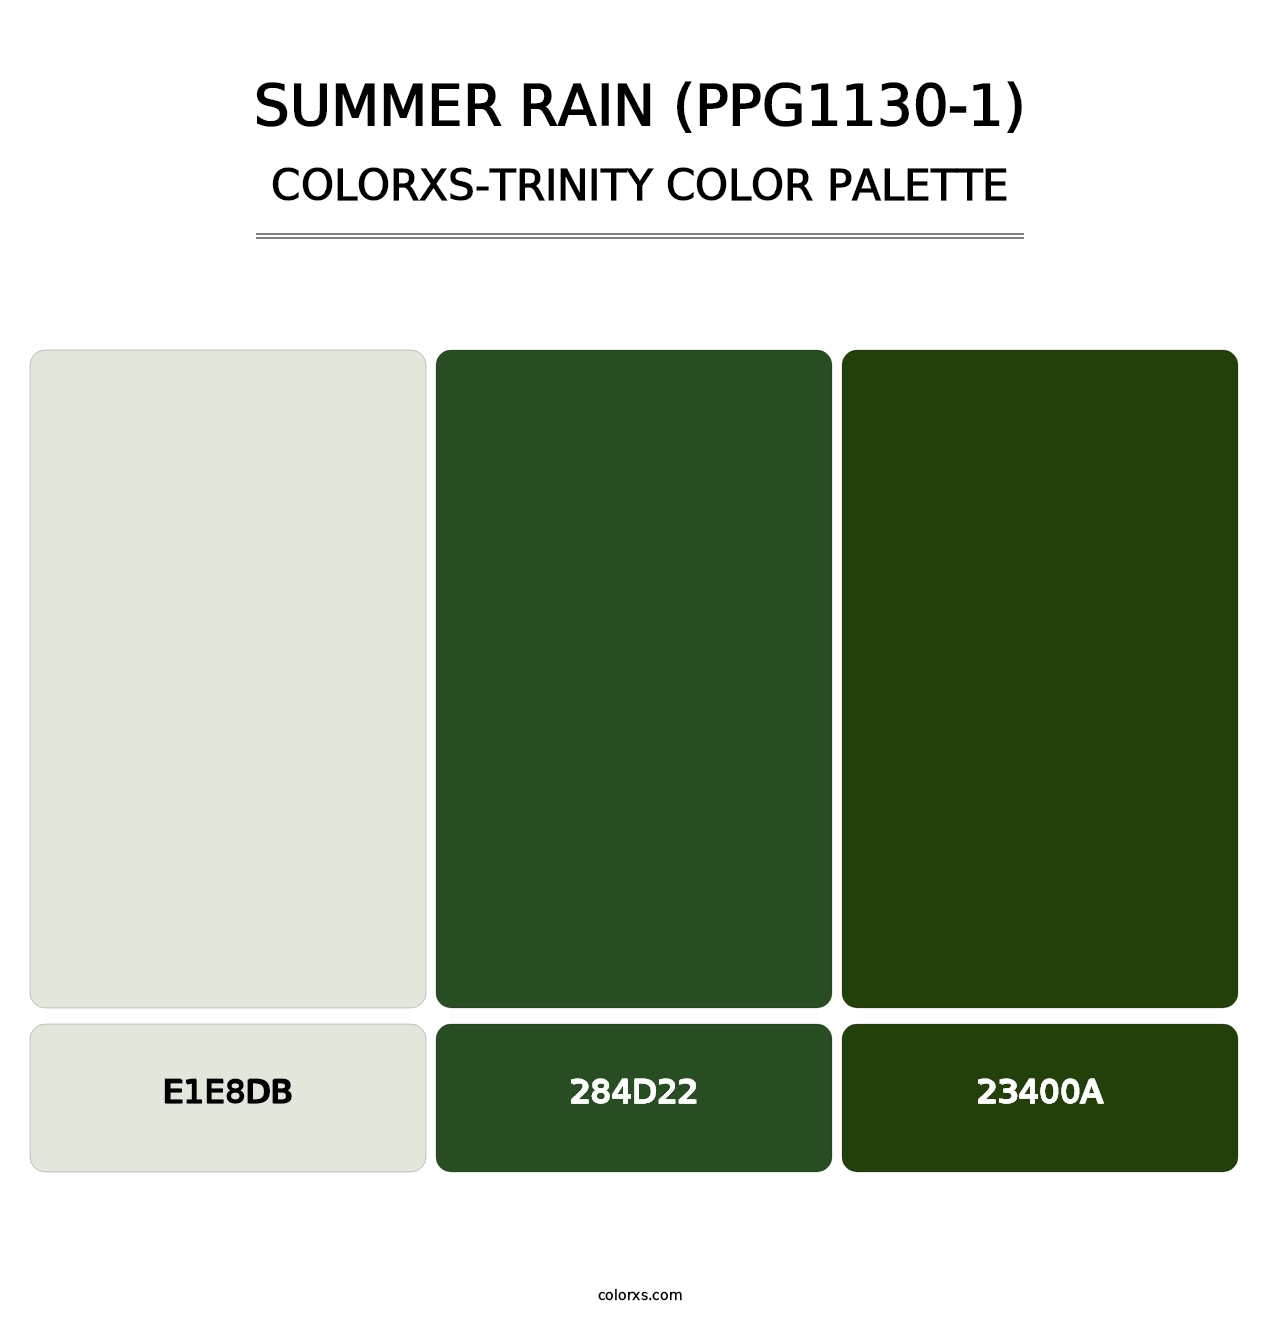 Summer Rain (PPG1130-1) - Colorxs Trinity Palette